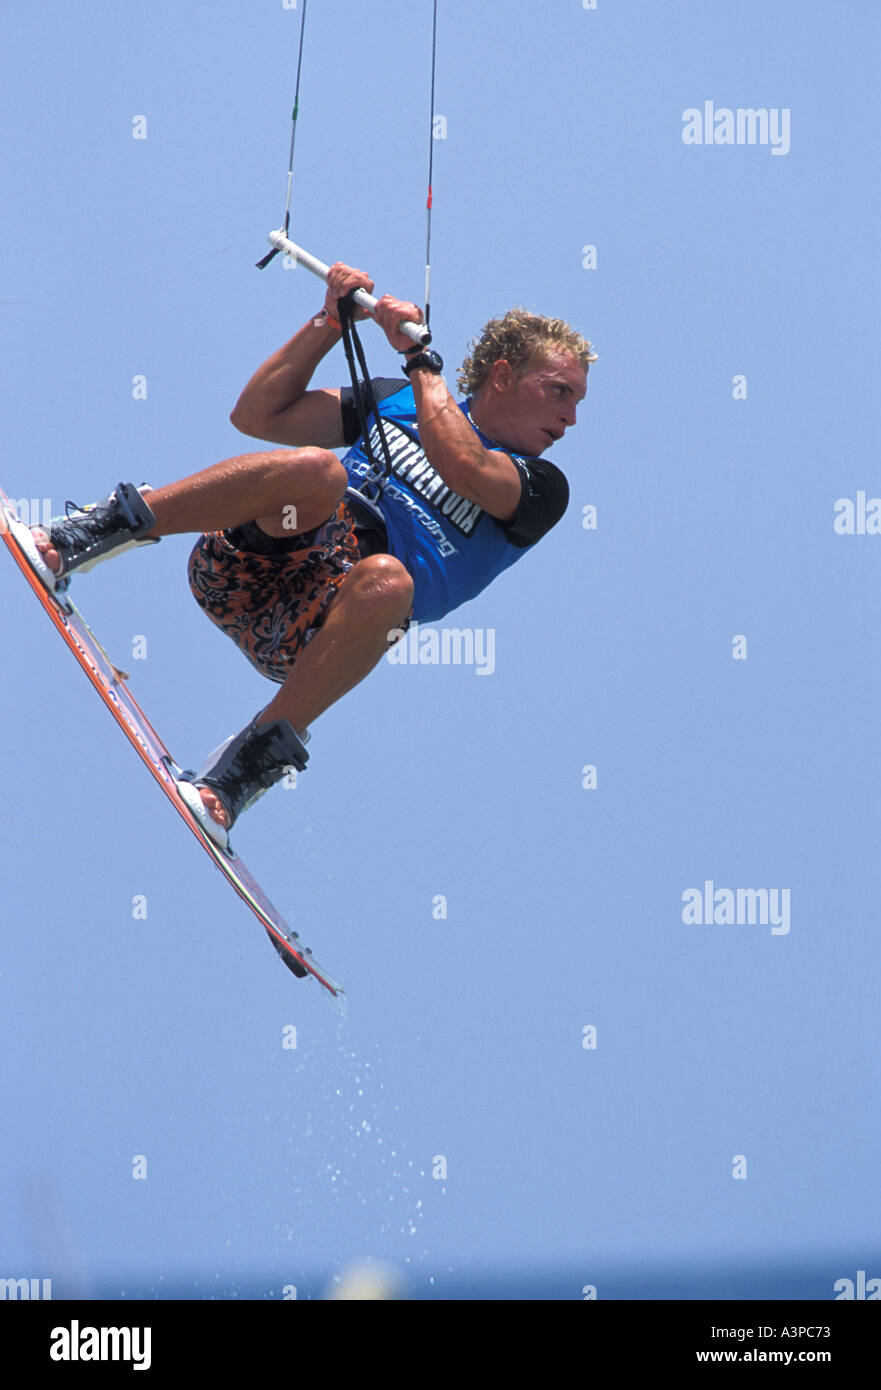 Kite surfing Stock Photo